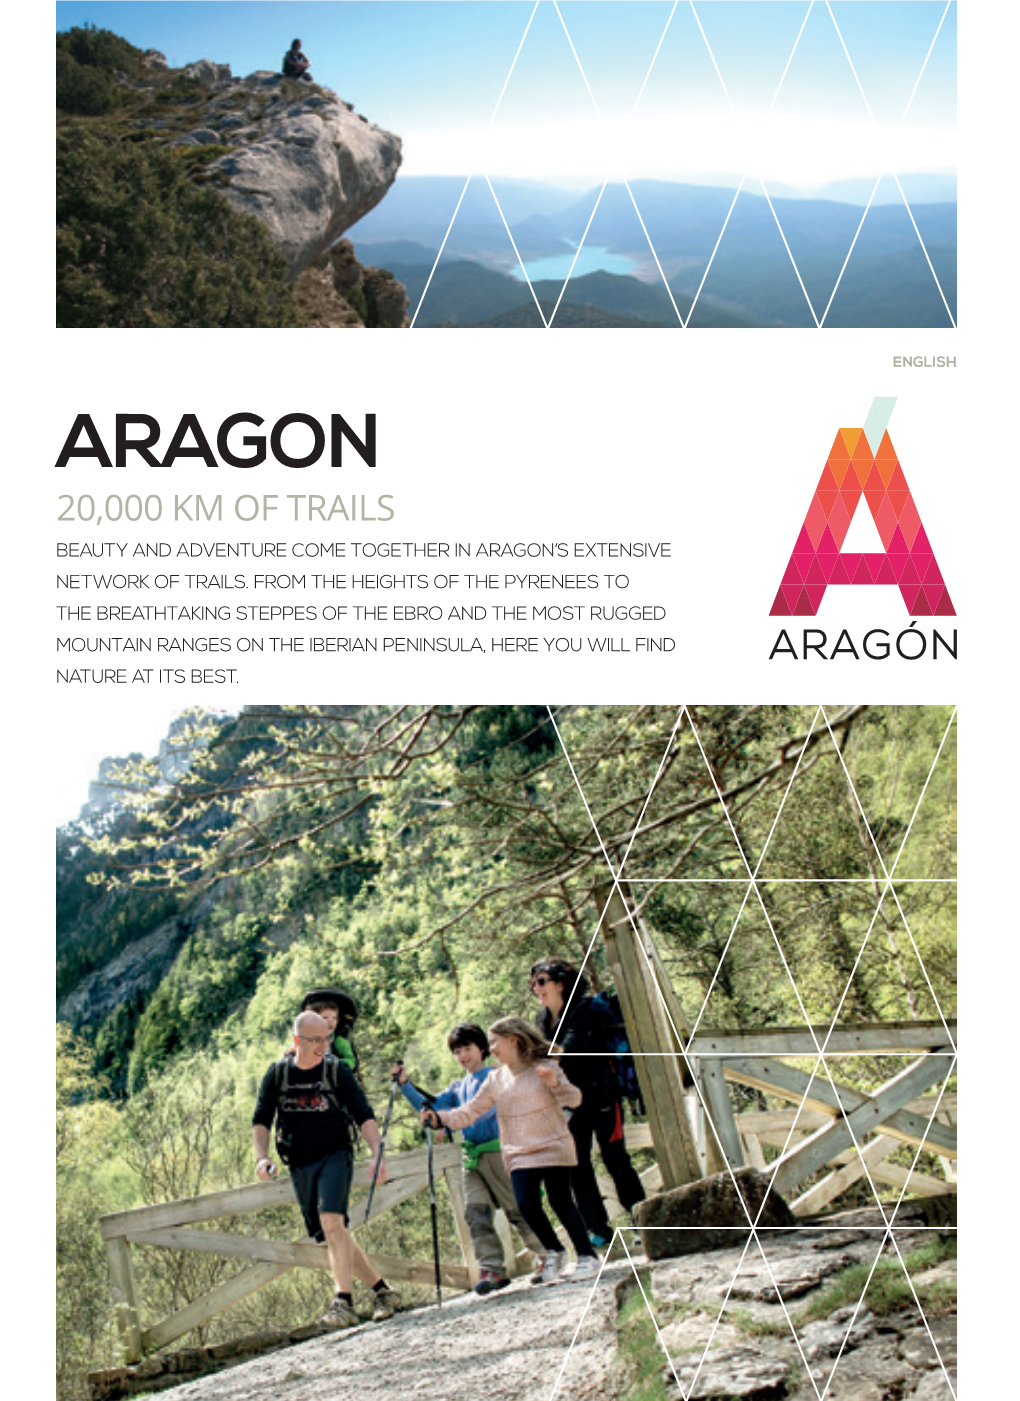 Hiking Trails of Aragon